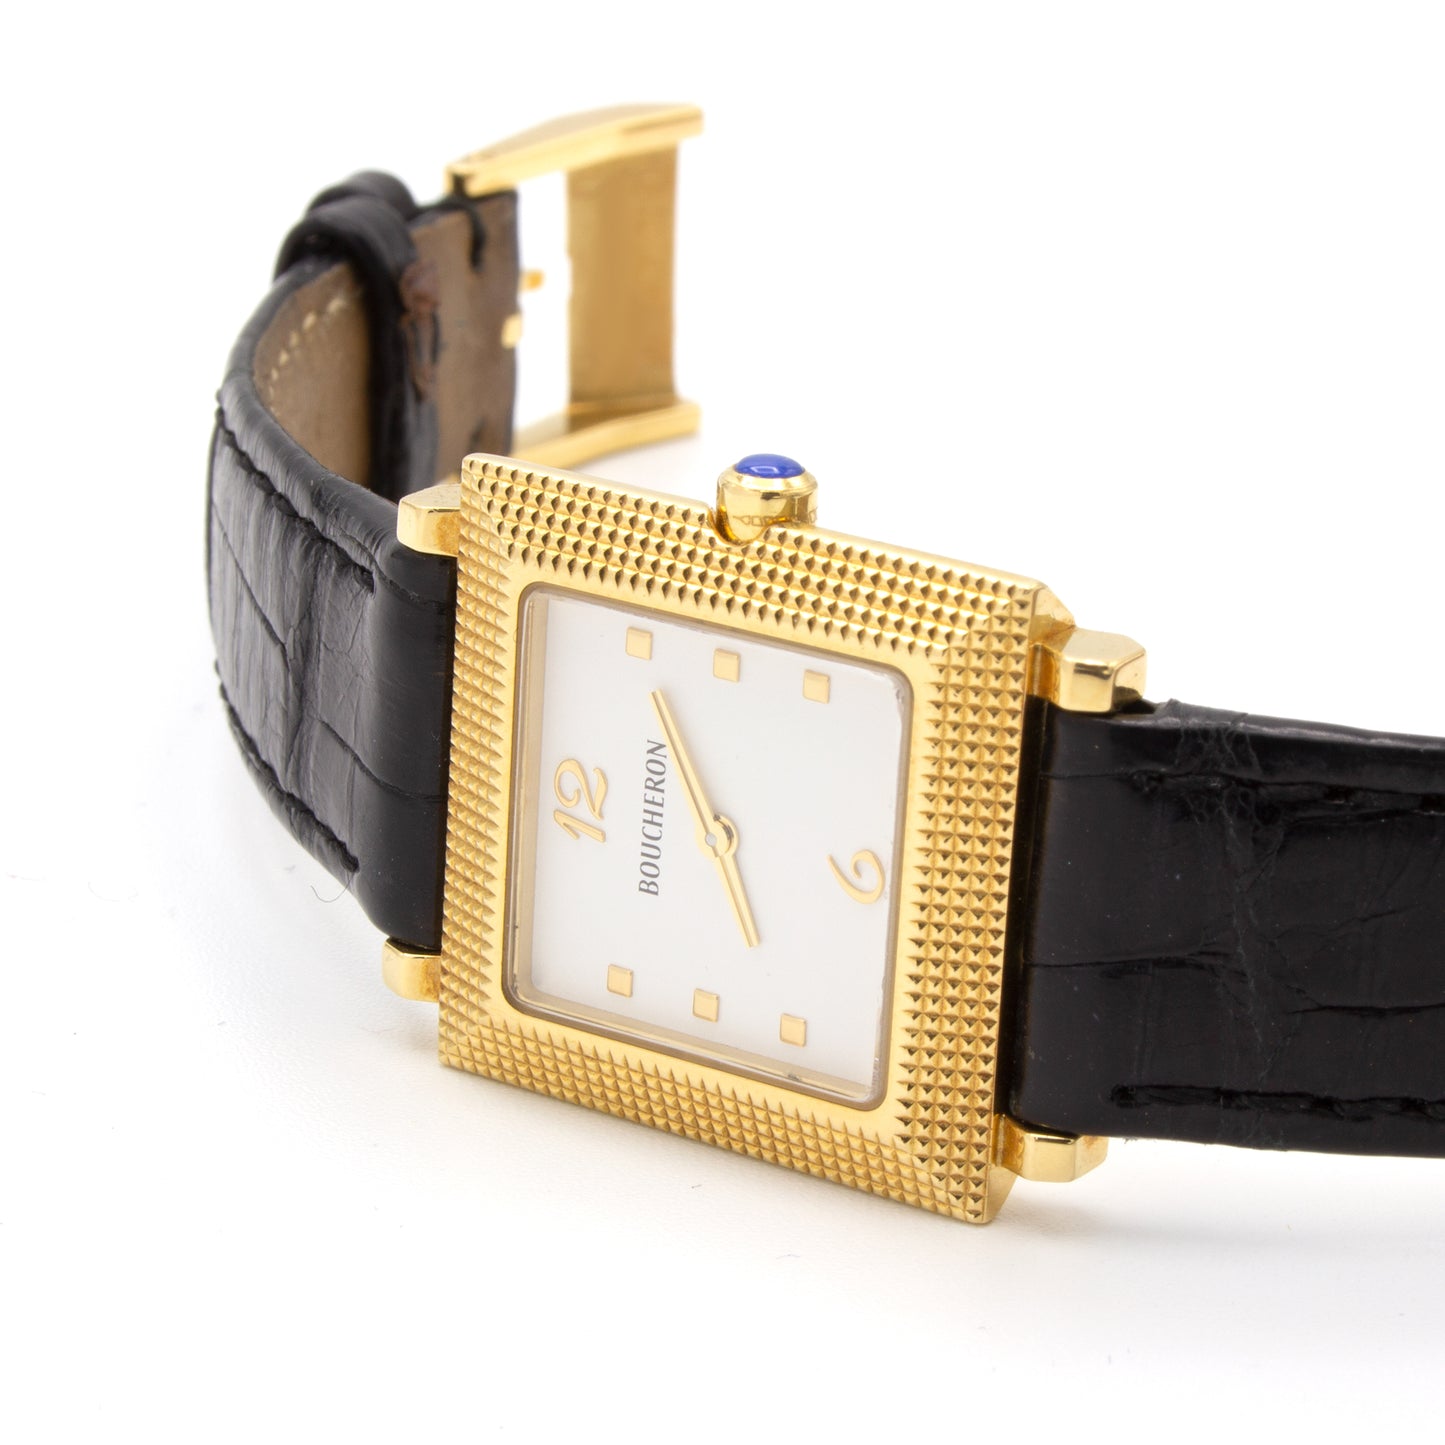 Boucheron 18K yellow gold watch